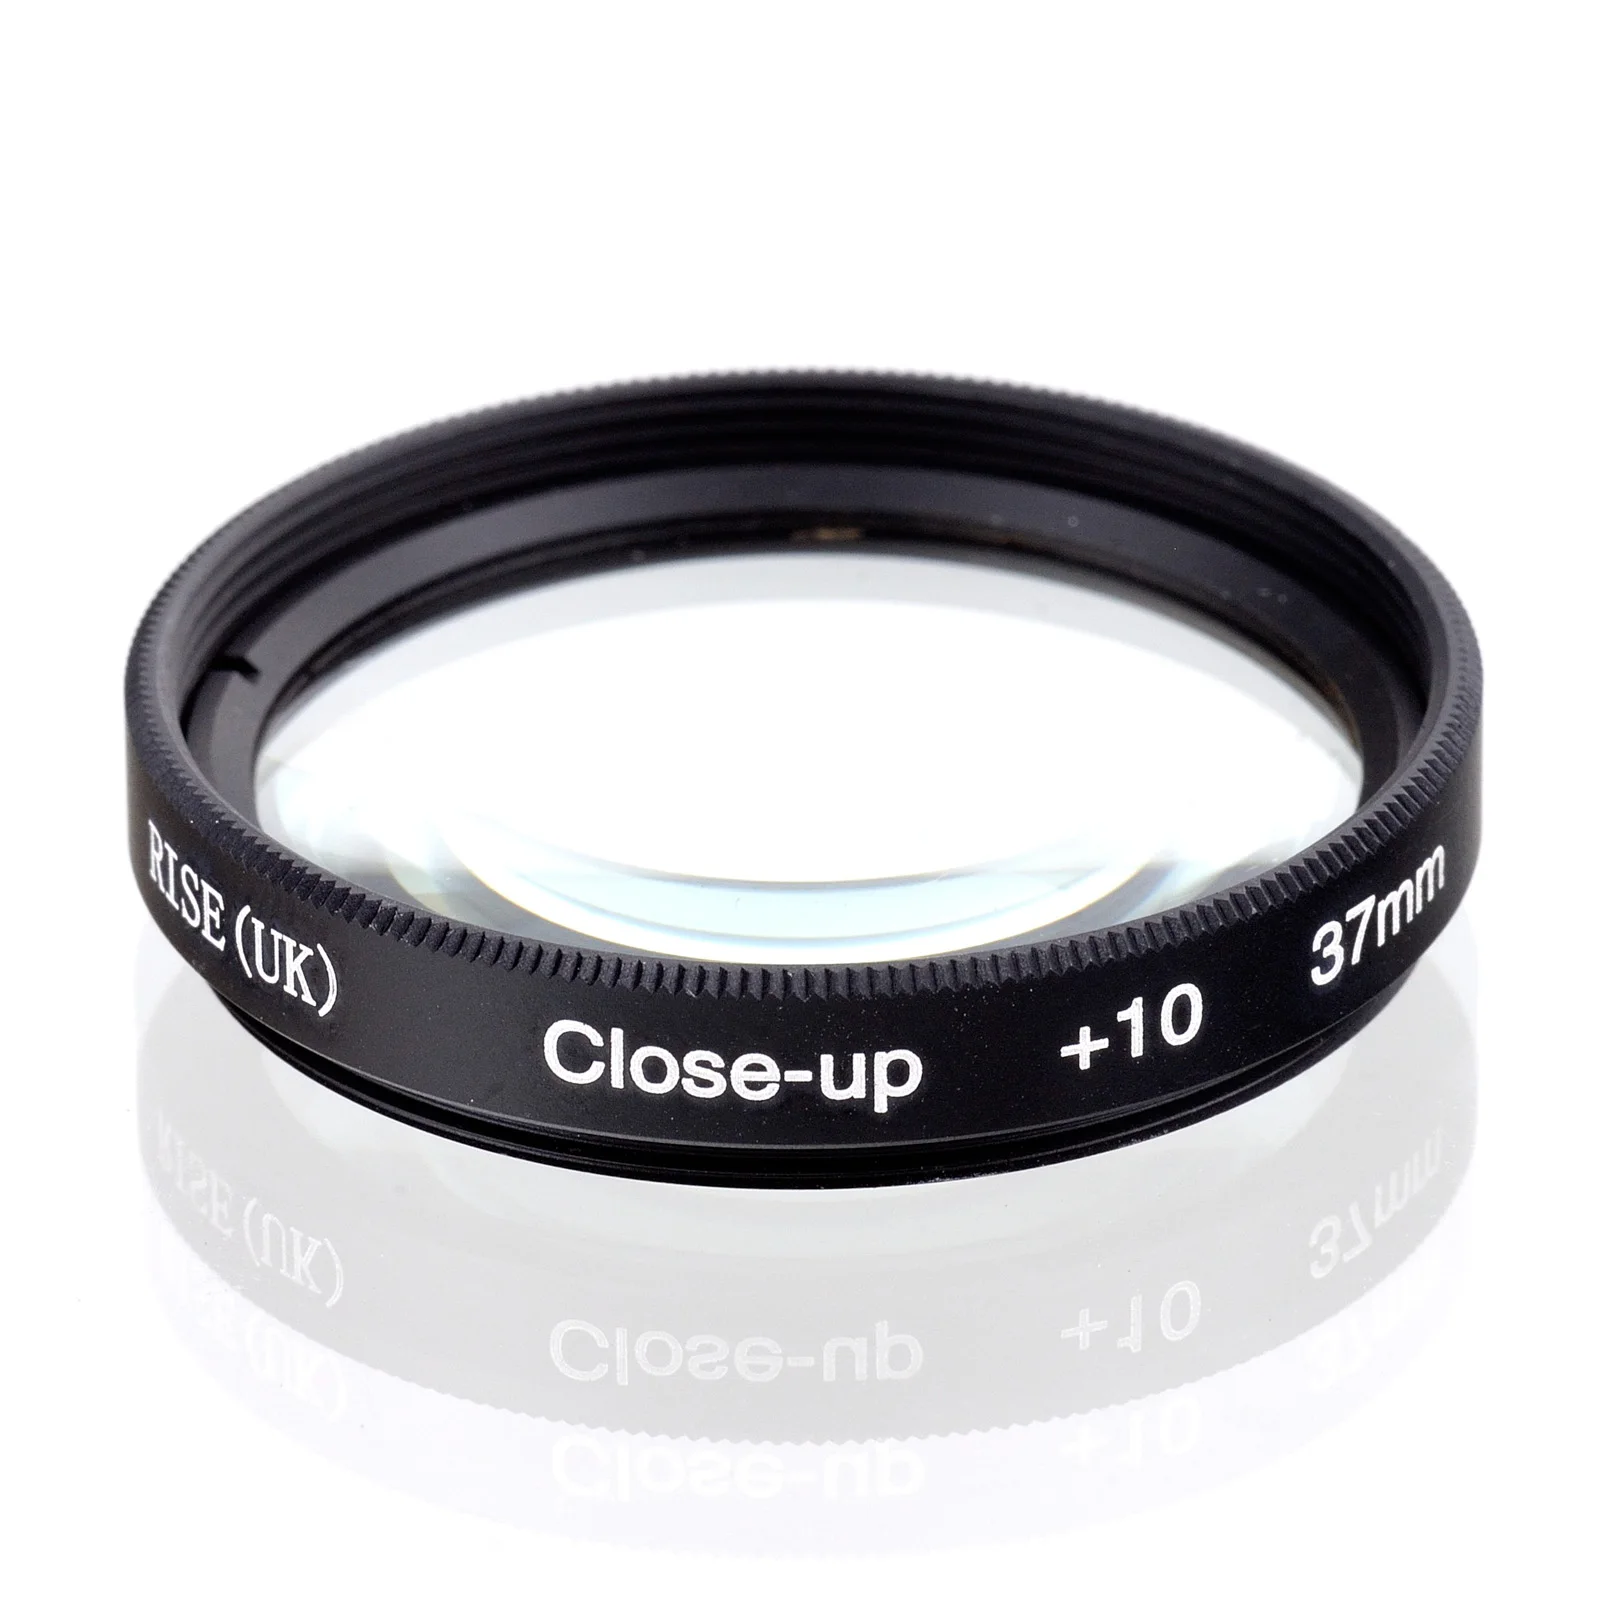 

RISE(UK) 37mm Macro Close-Up +10 Close Up Filter for All DSLR digital cameras 37MM LENS